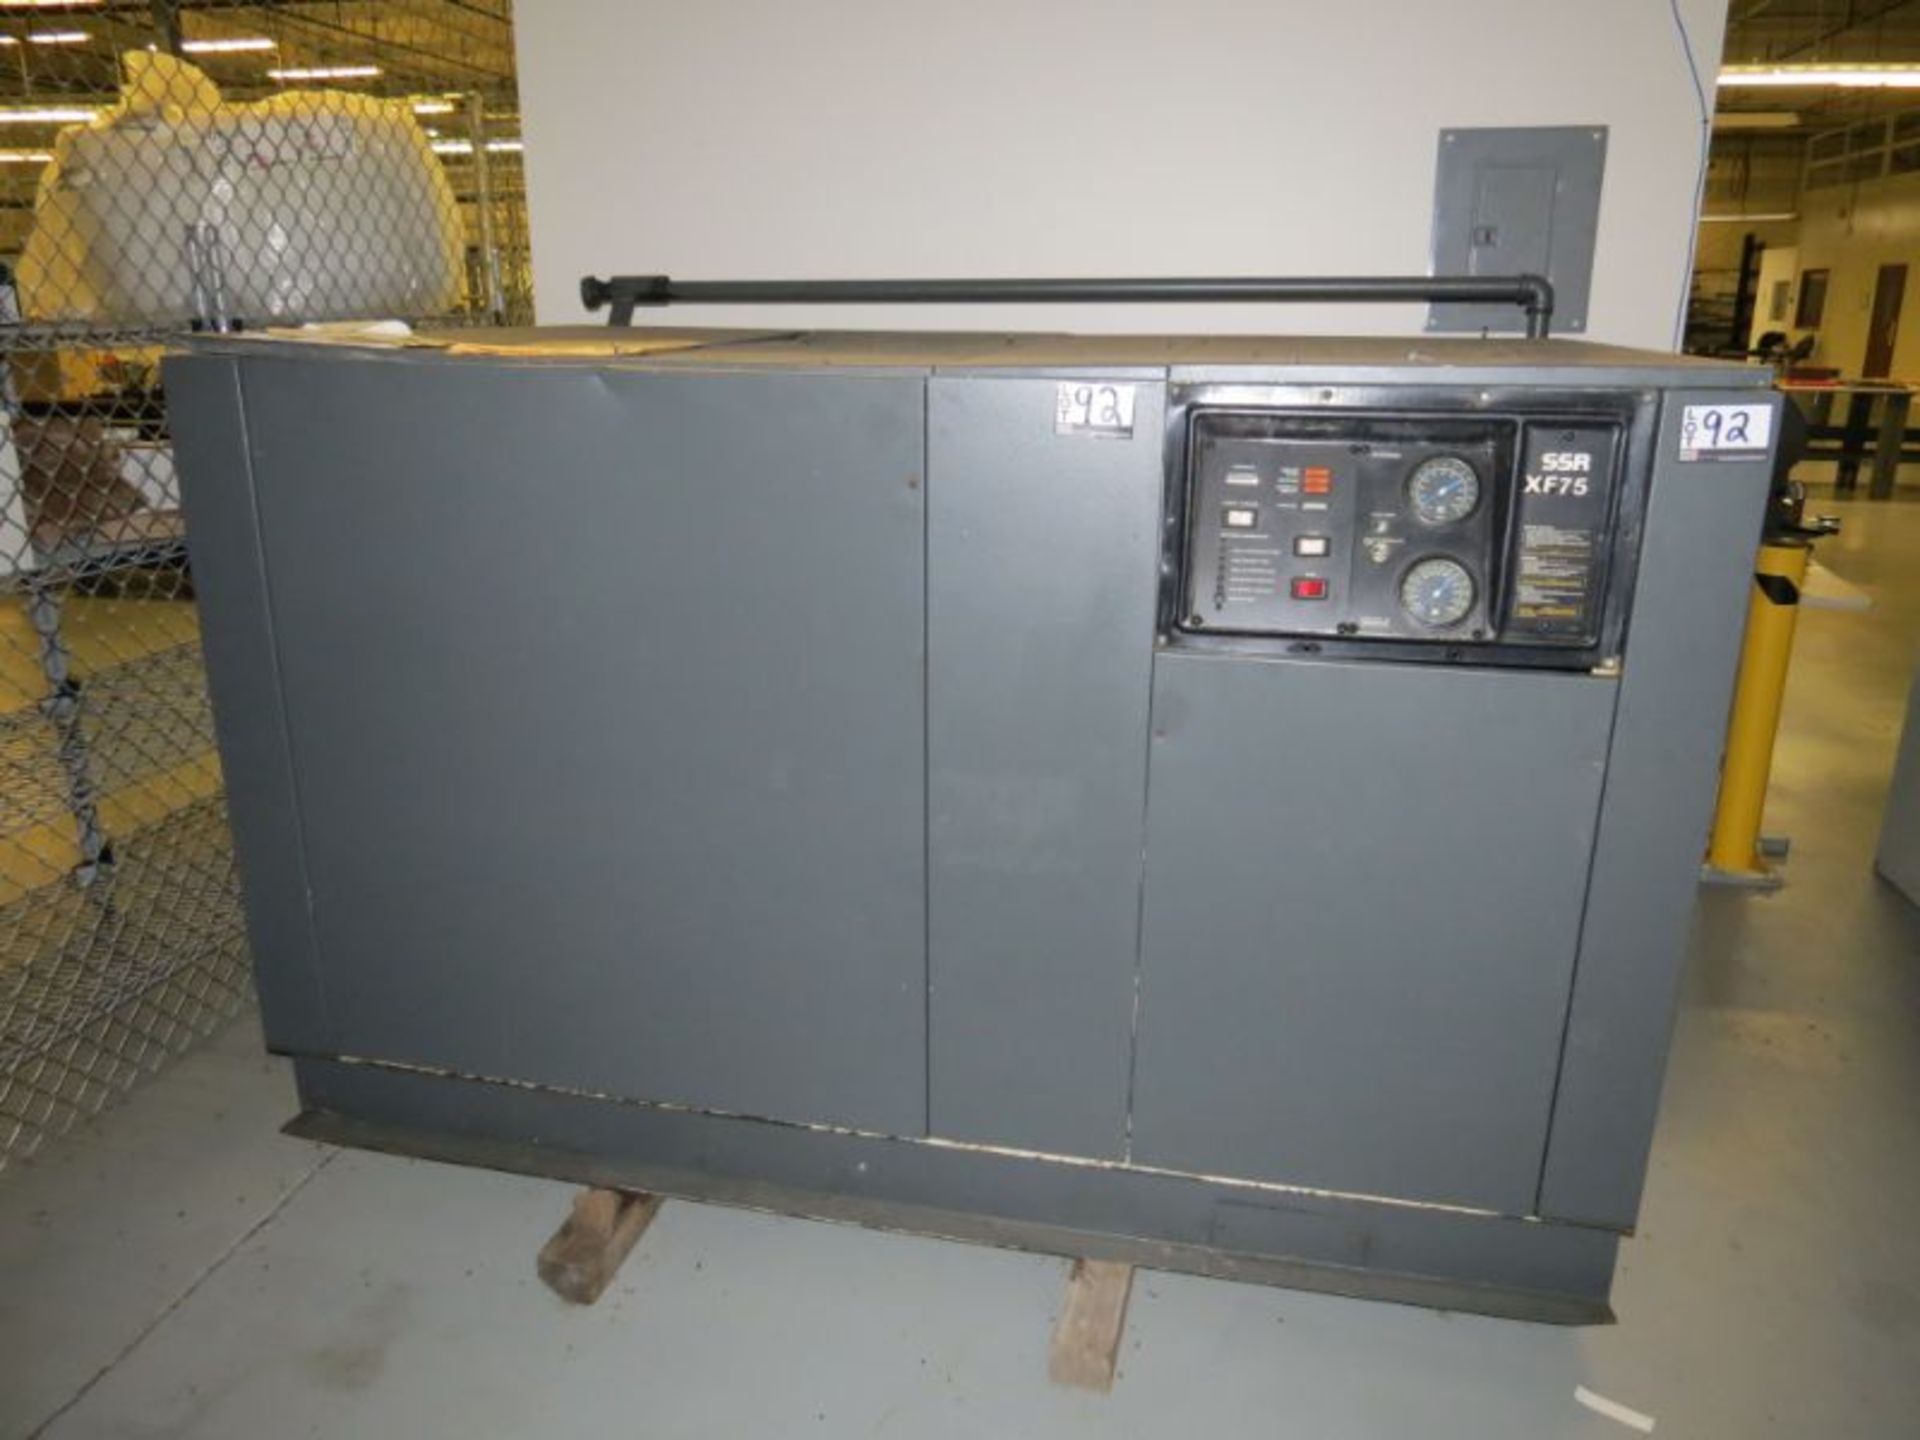 Ingersoll Rand SSRXF 75 Air Compressor, 75HP, 1750 RPM, 49482 Hours, s/n D2218 U85A - Image 2 of 7